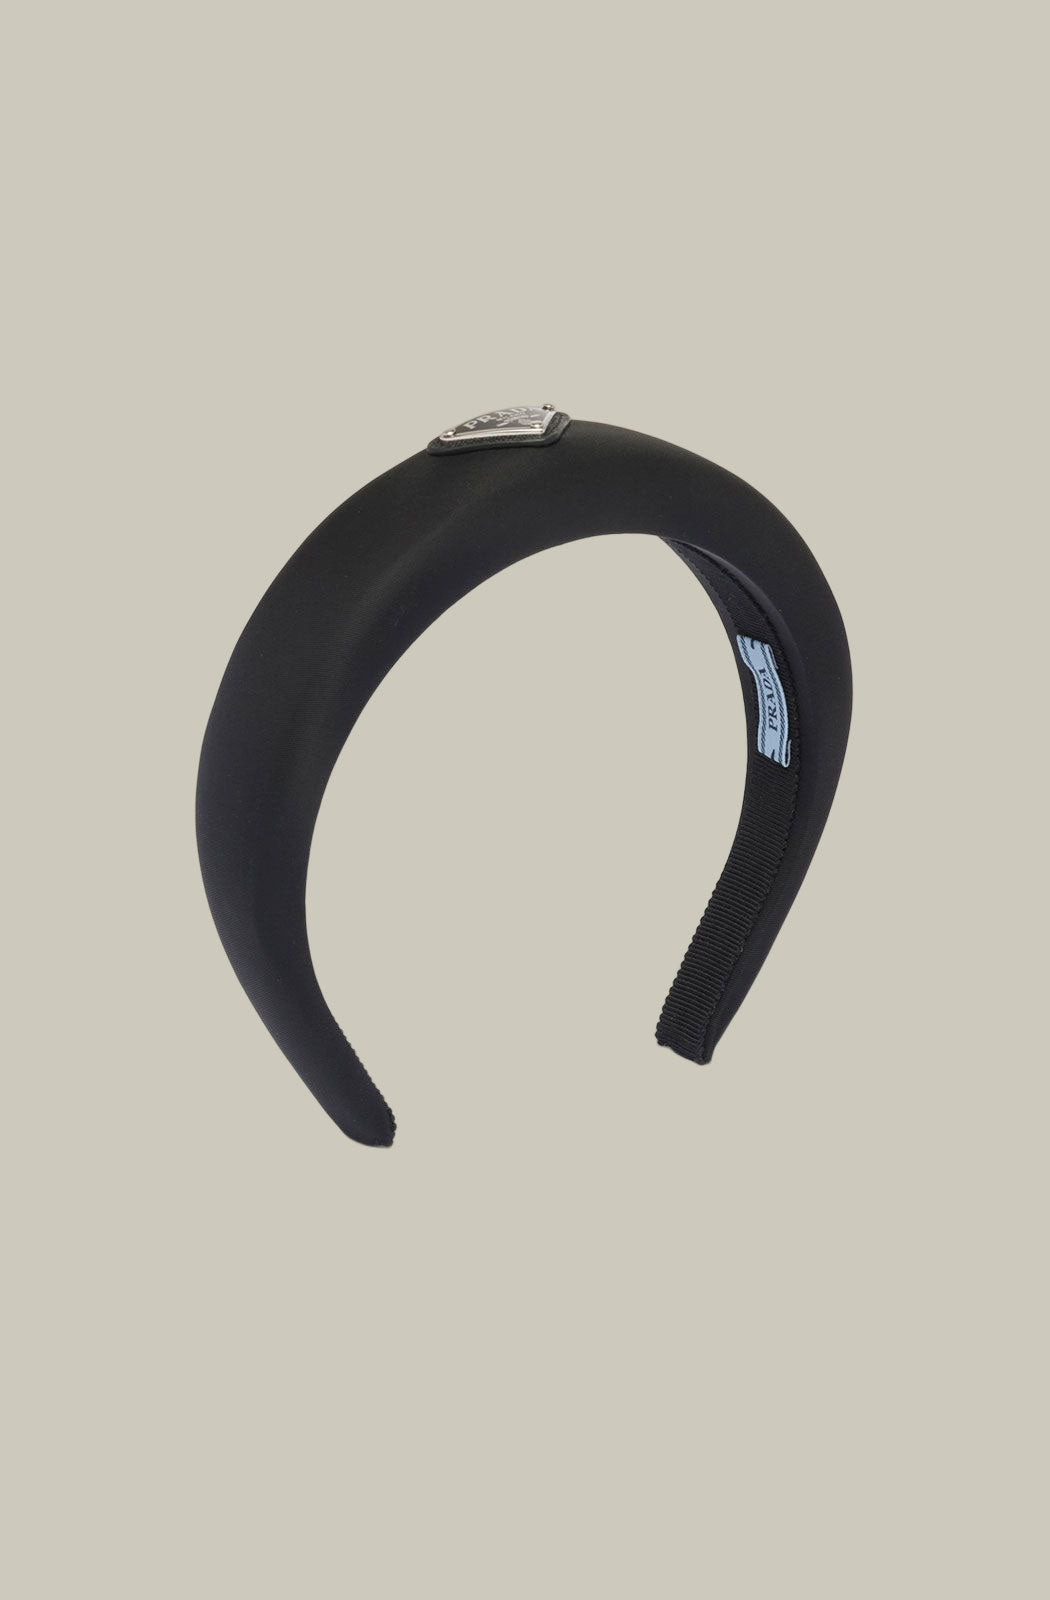  Prada’s black padded Re-nylon headband with triangle logo plaque